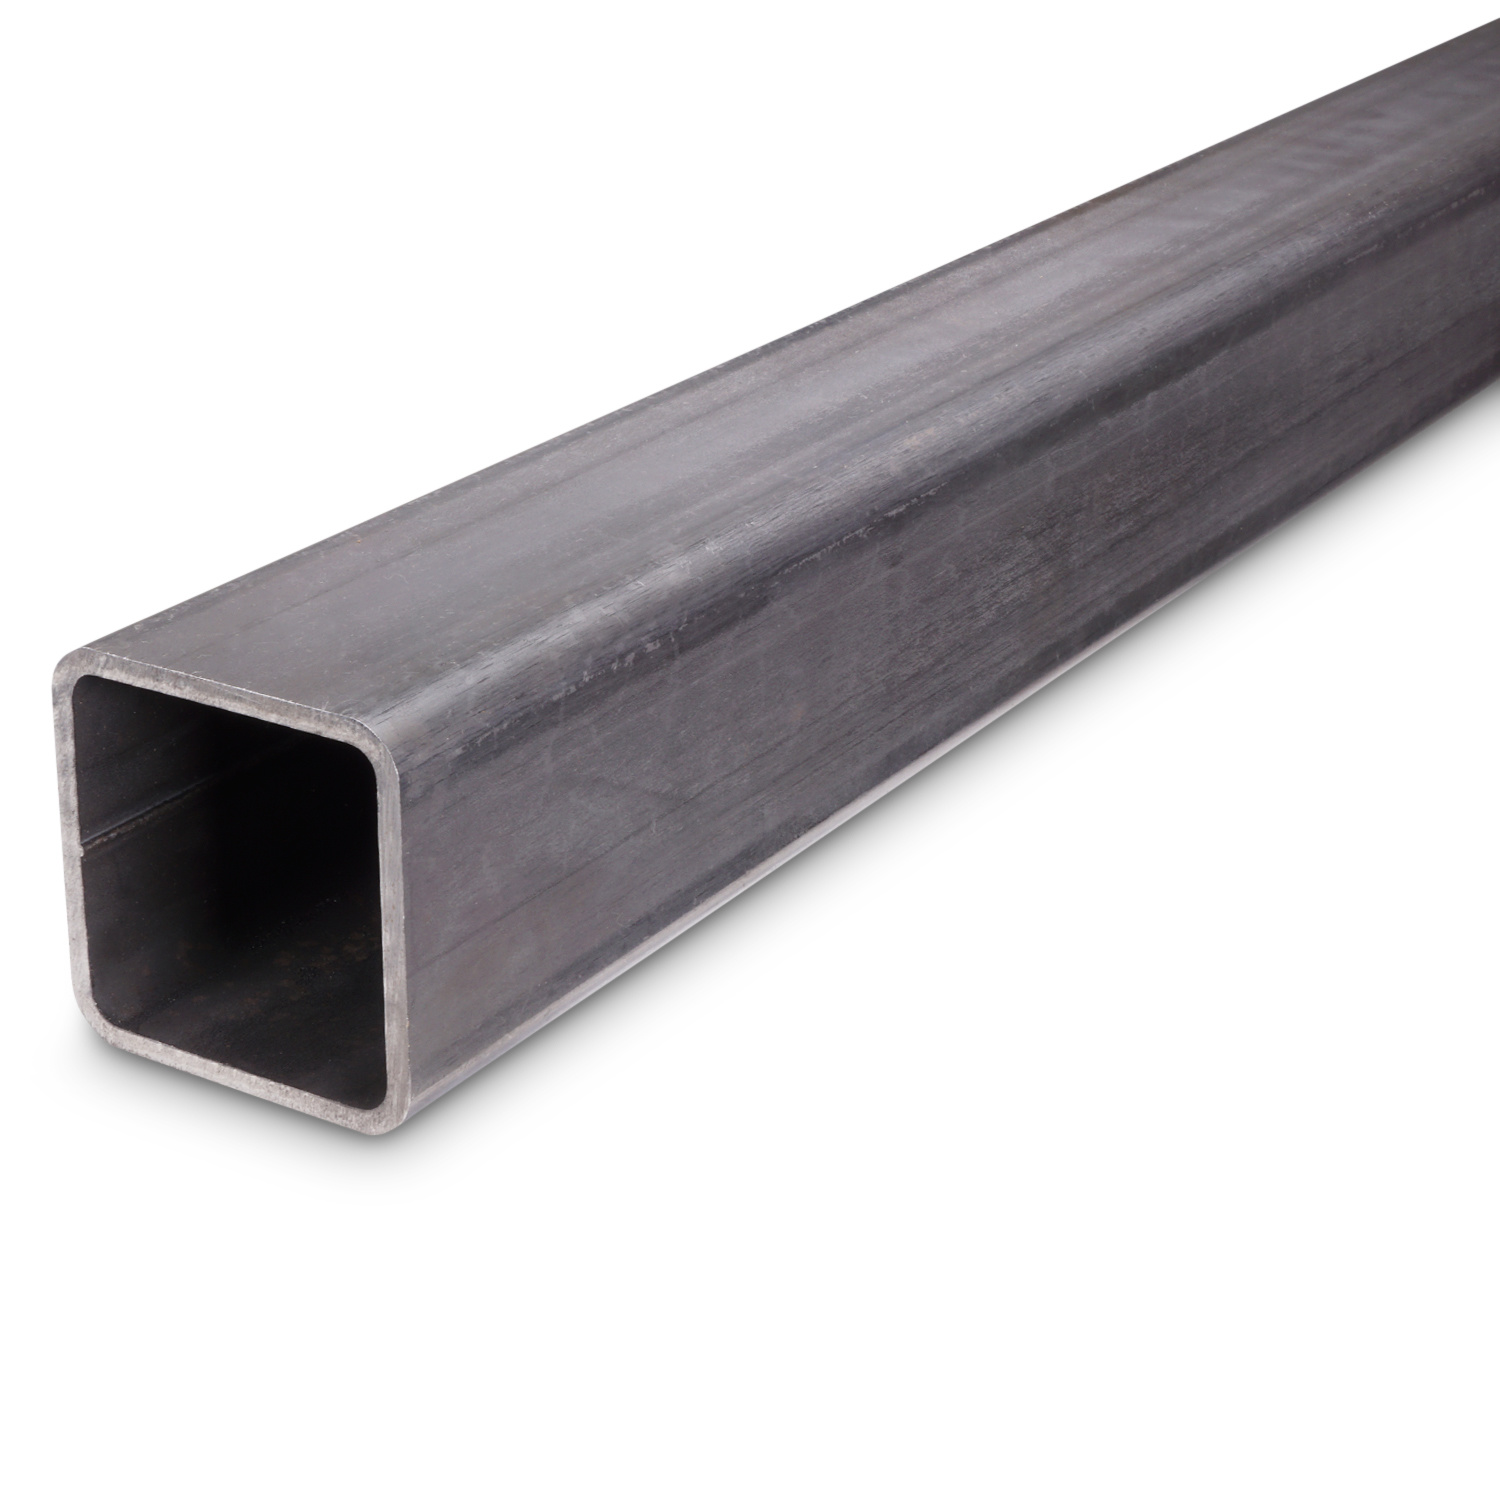  Koker staal - vierkante buis kokerprofiel KGV staal - S235JR - 100x100x6 MM